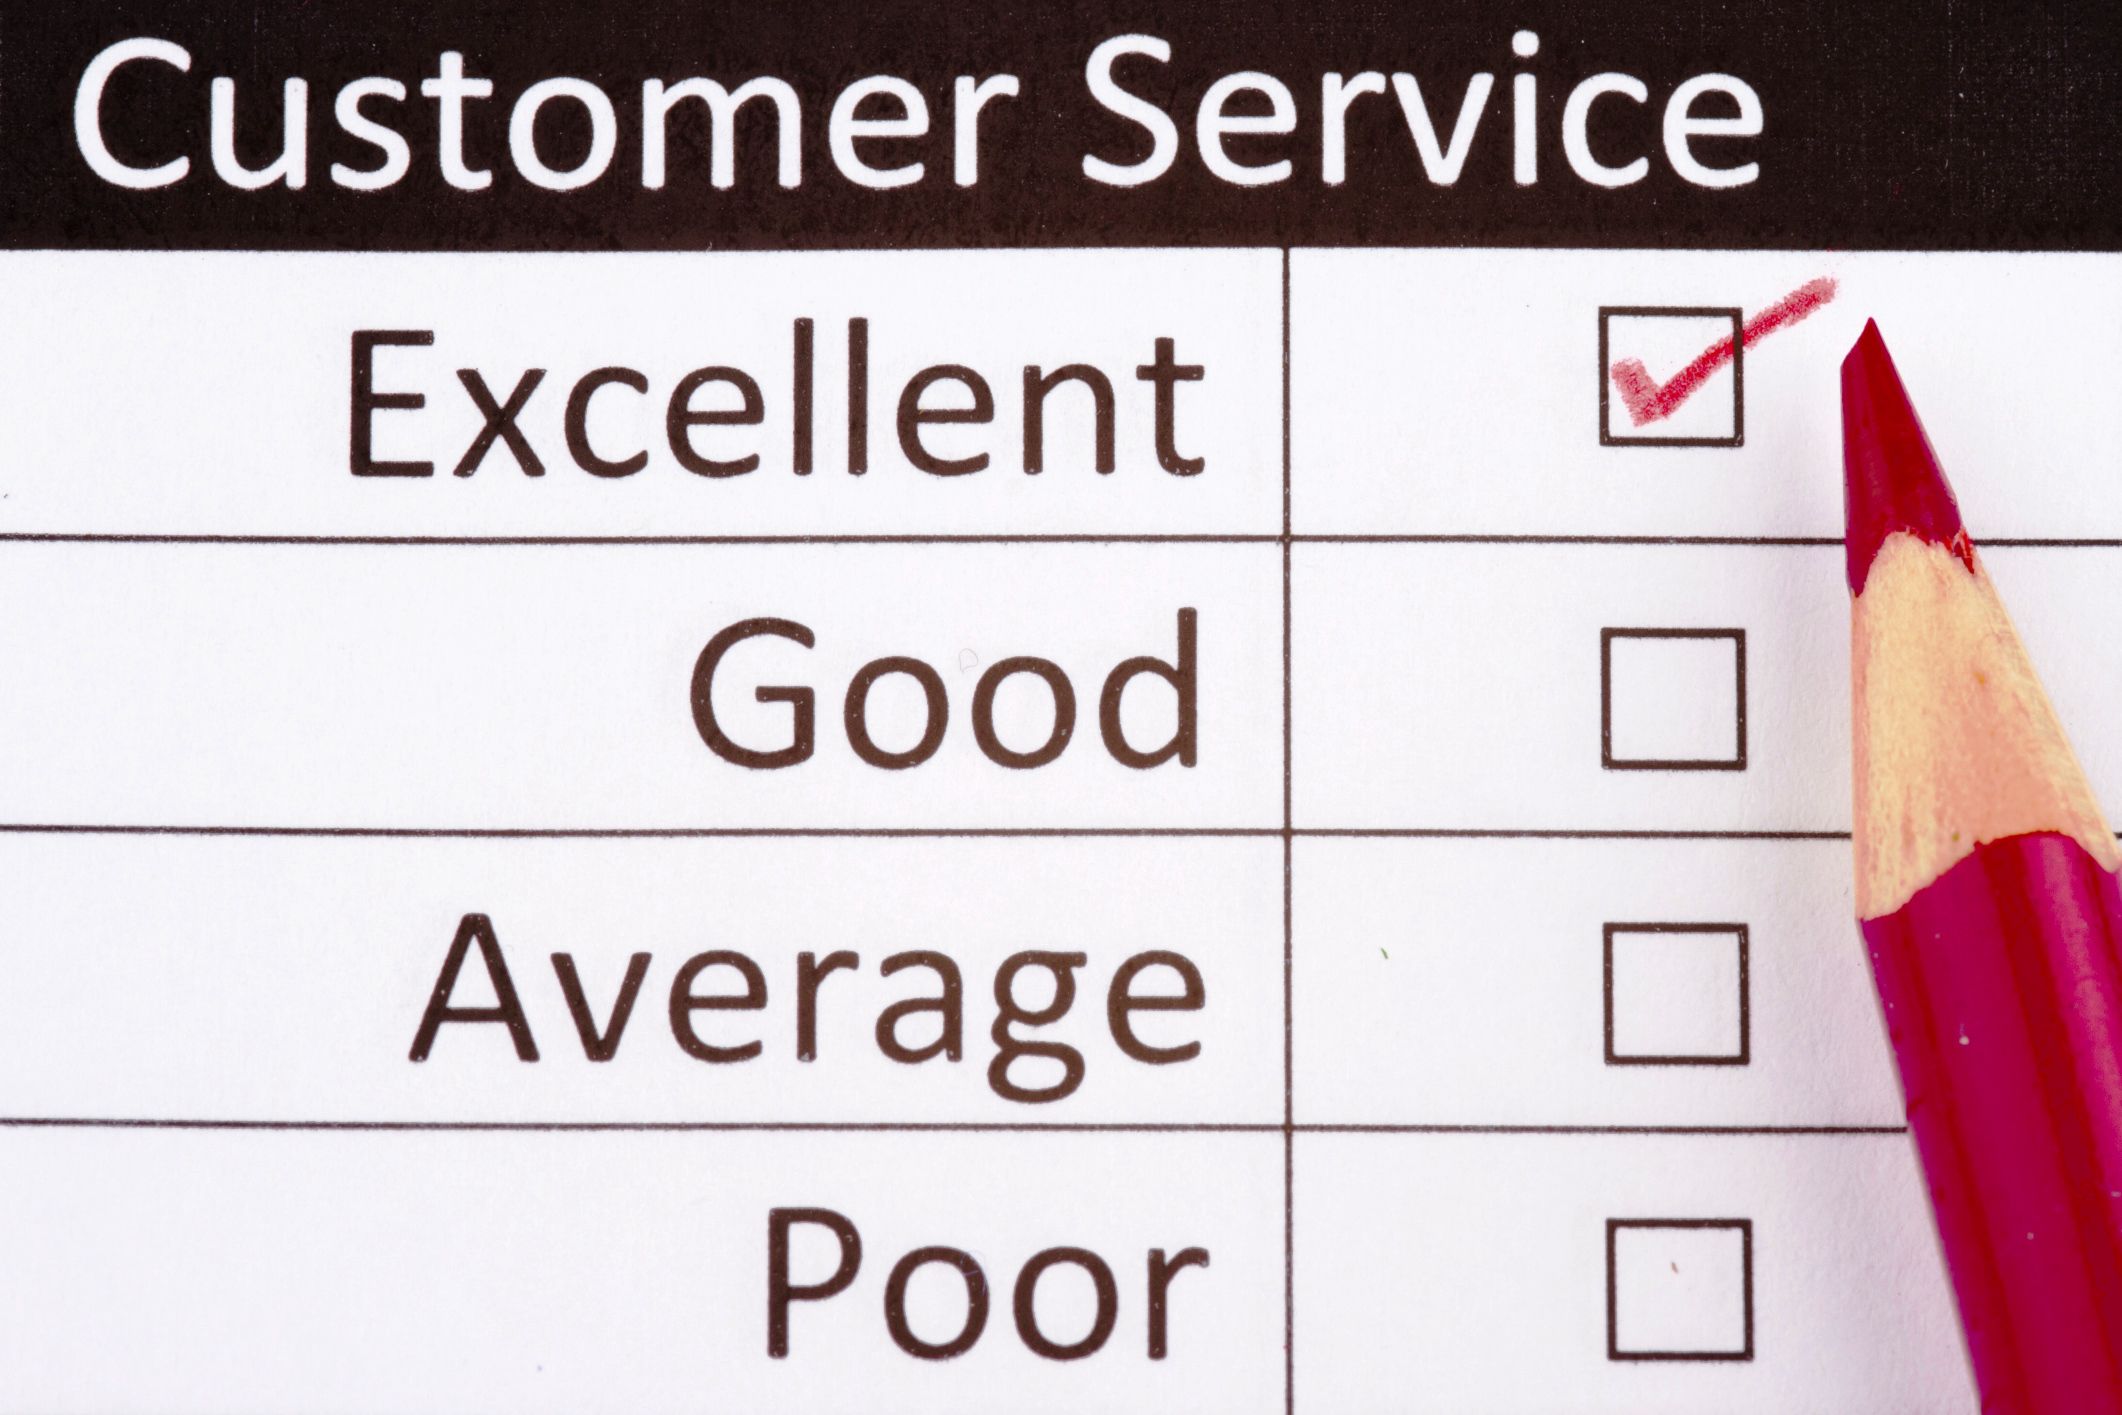 Image result for customer service